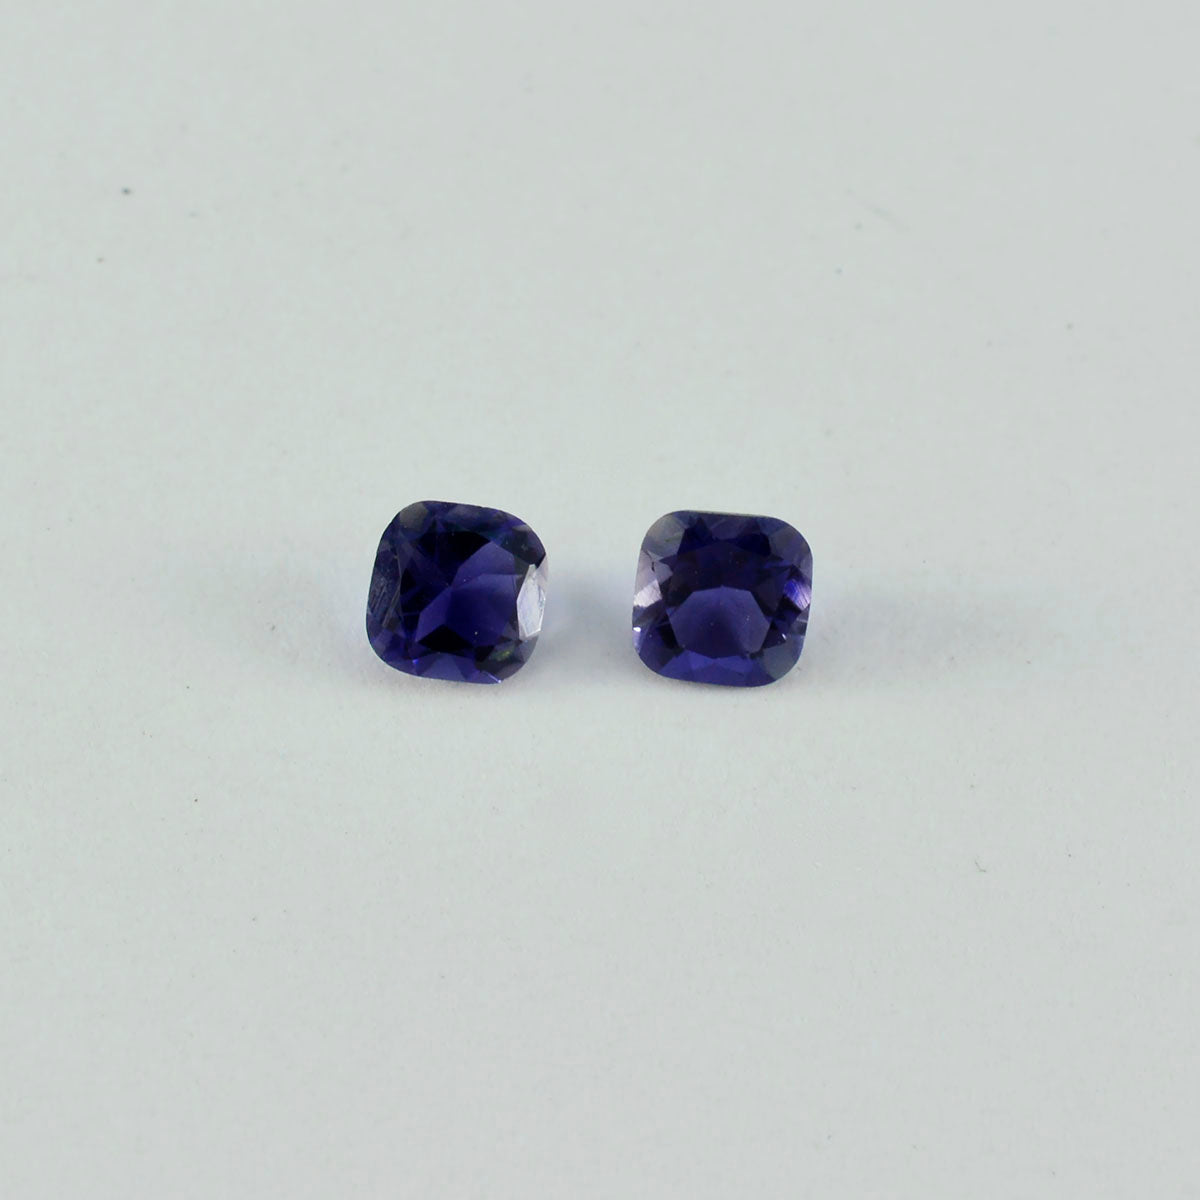 Riyogems 1PC Blue Iolite Faceted 8x8 mm Cushion Shape astonishing Quality Gems